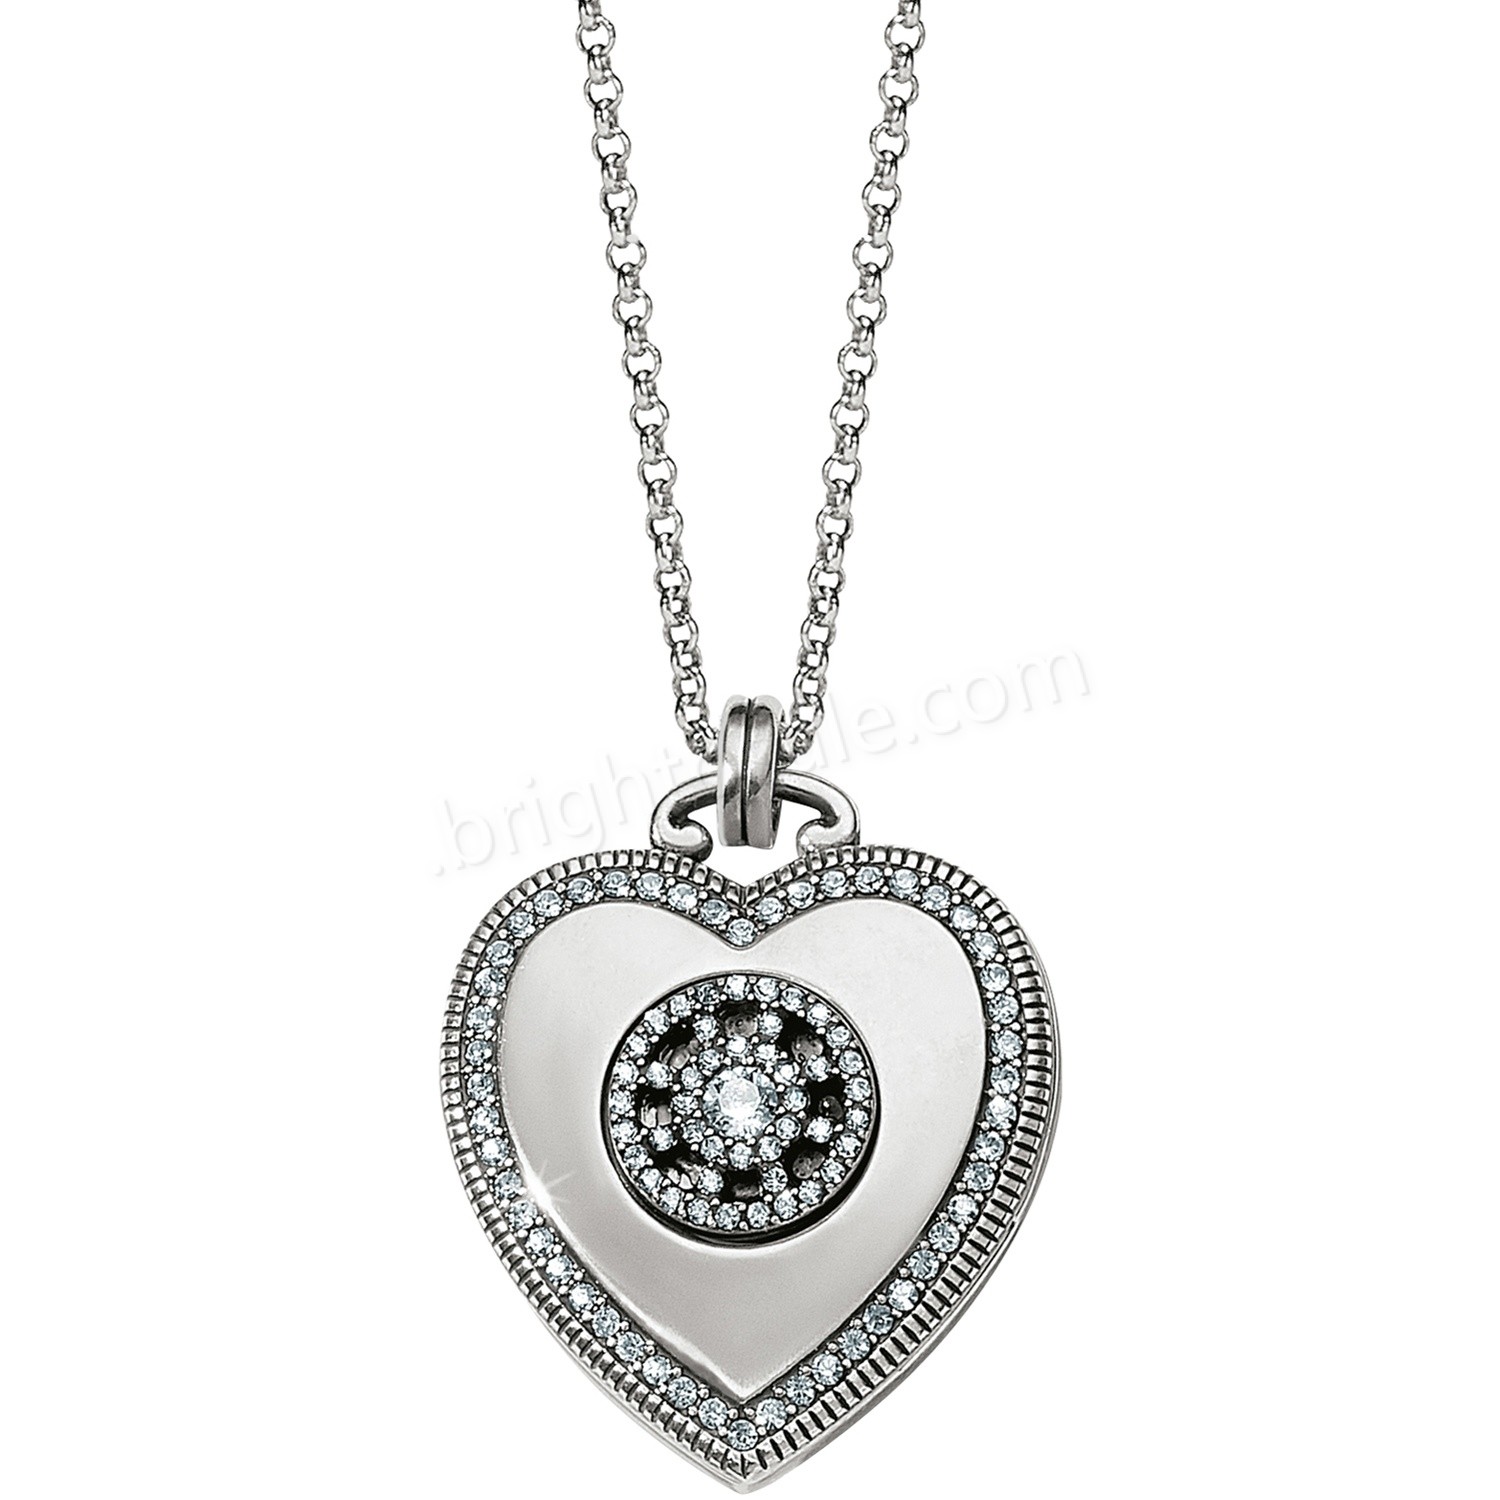 Brighton Collectibles & Online Discount Illumina Small Heart Locket Necklace - Brighton Collectibles & Online Discount Illumina Small Heart Locket Necklace